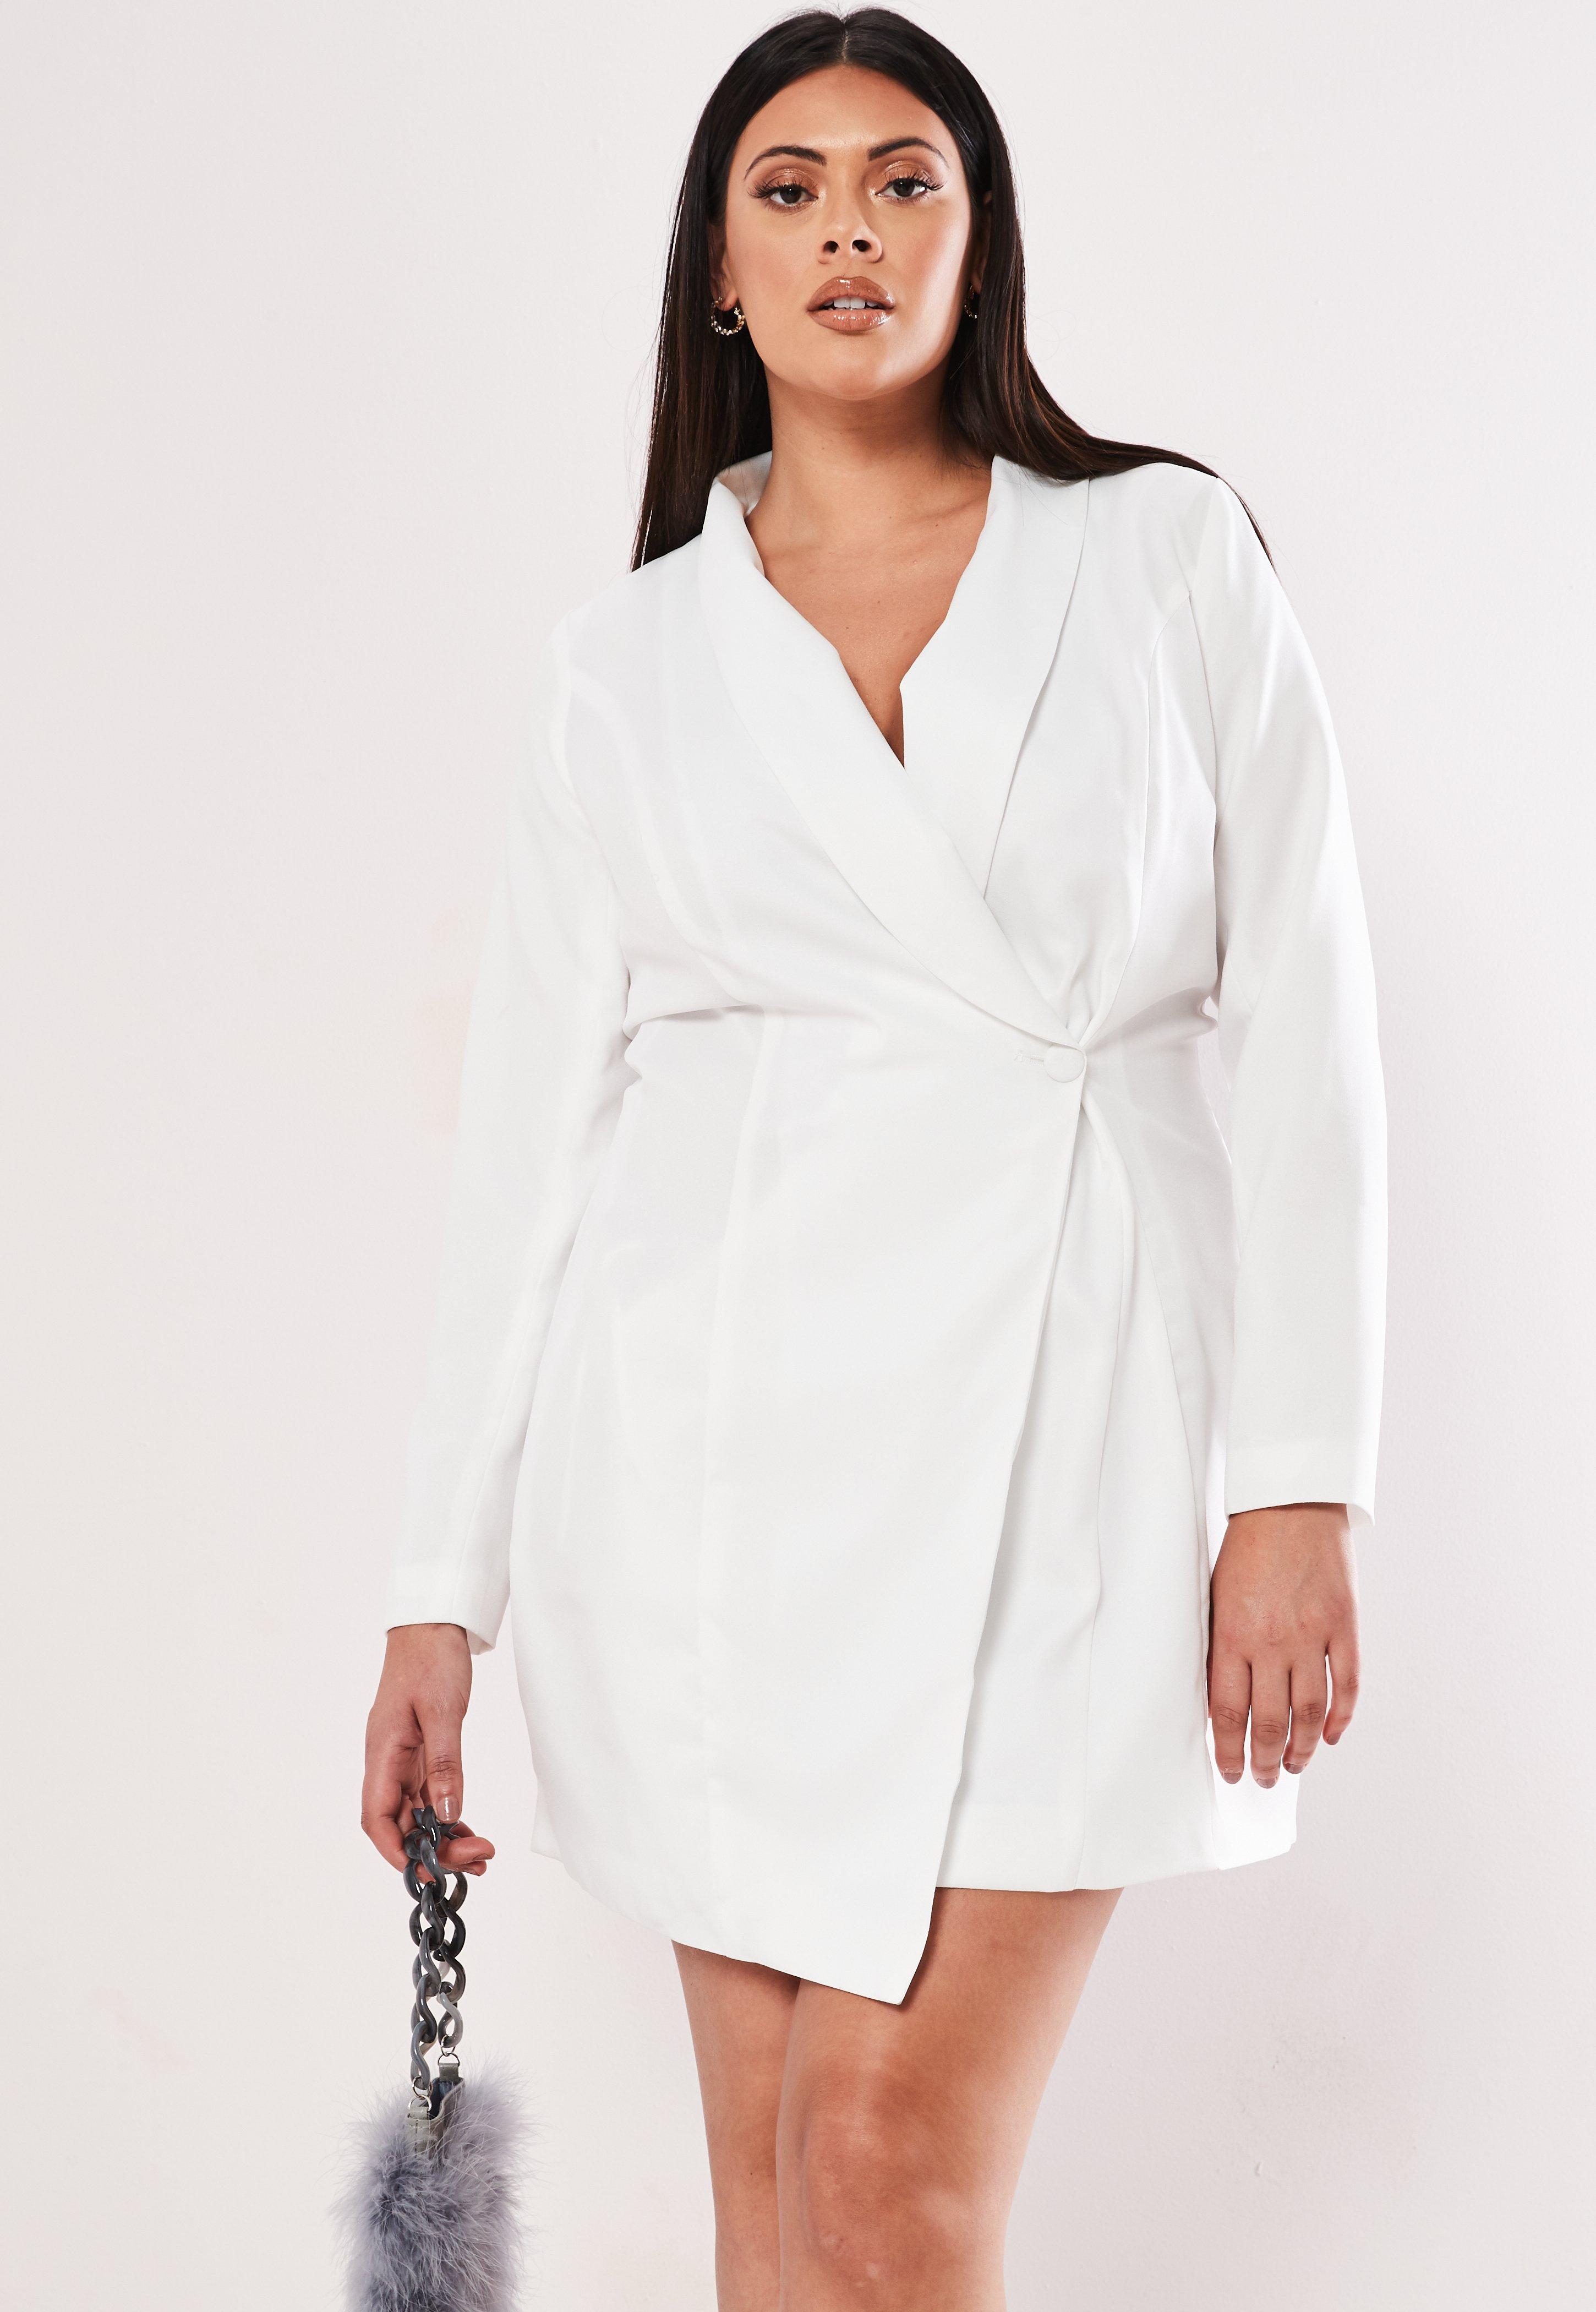 white plus size blazer dress